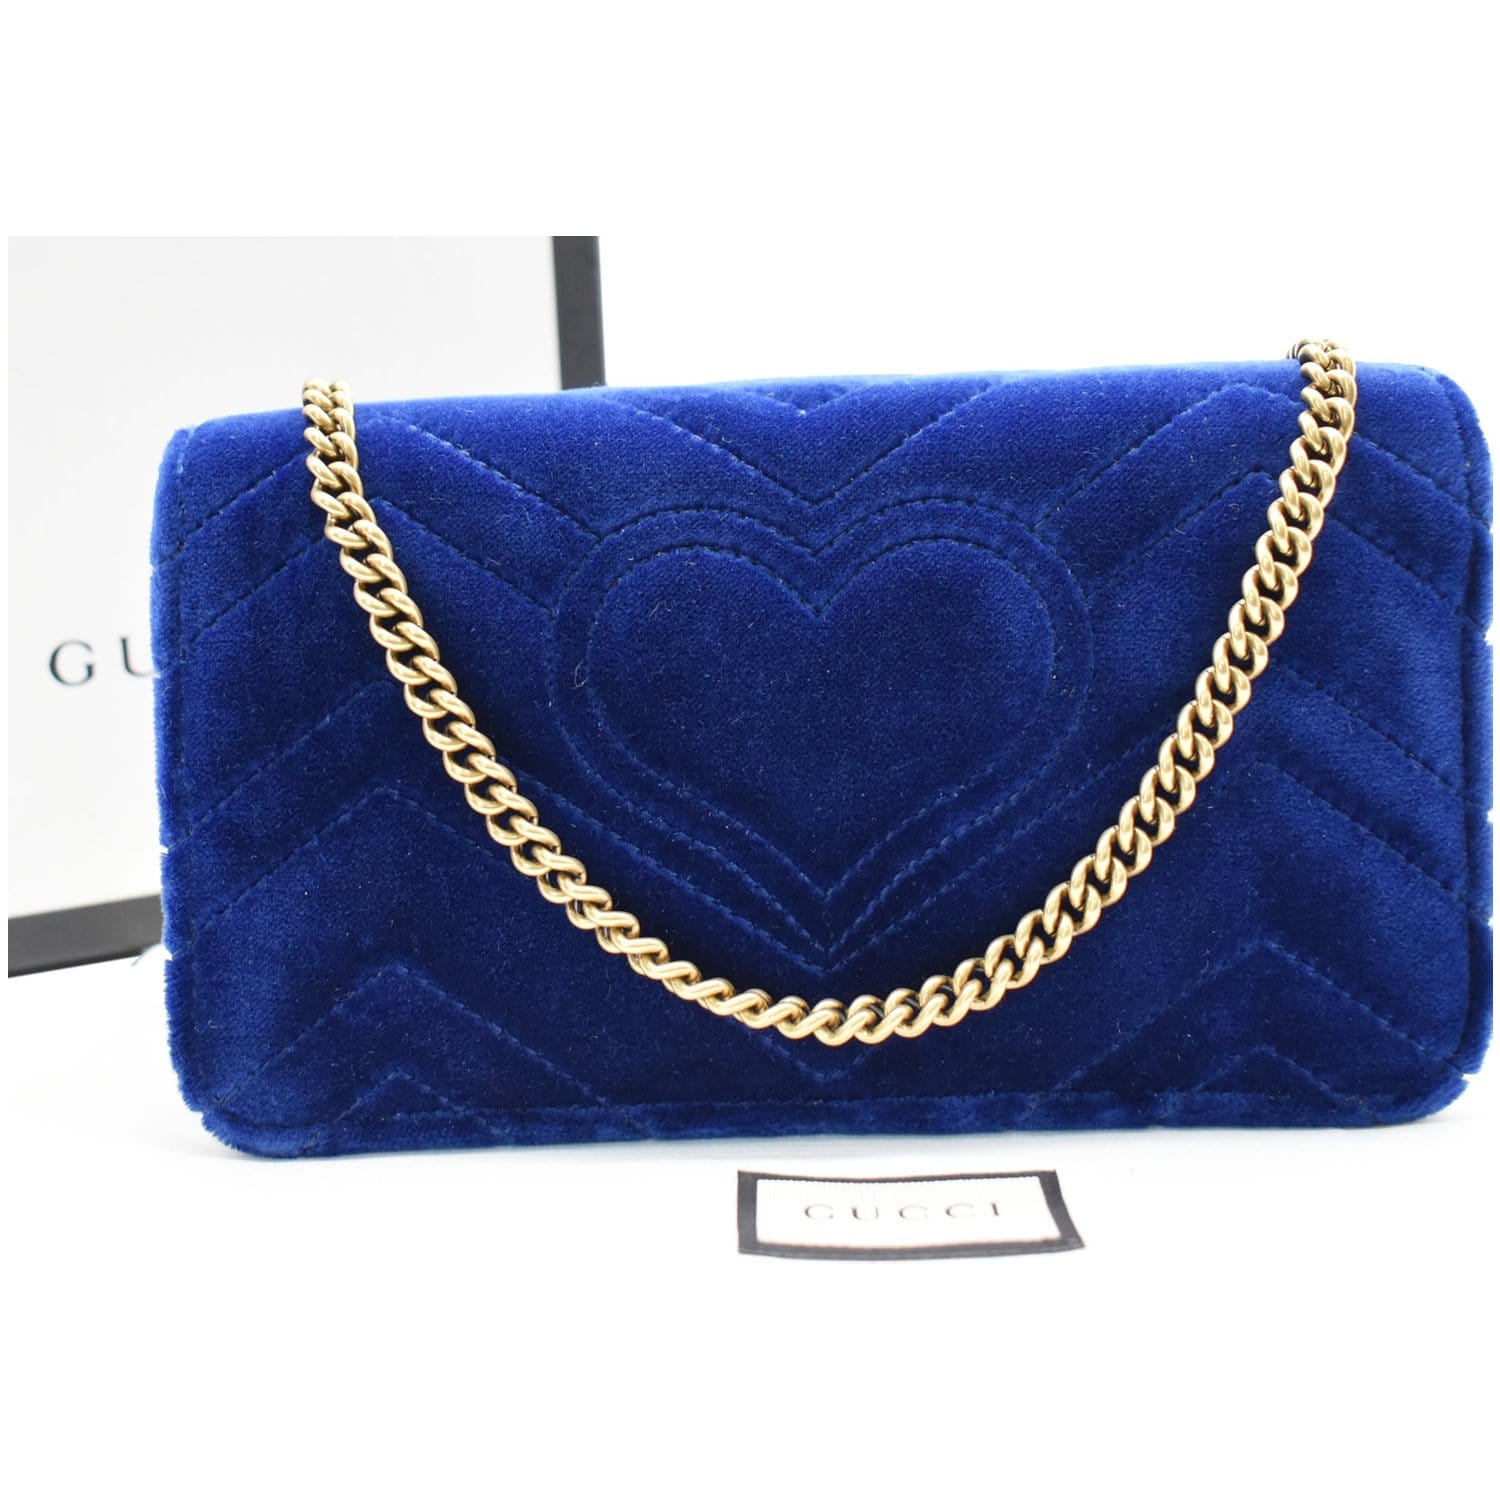 Gucci Marmont Dark Blue Velvet Bag, Perfect Condition